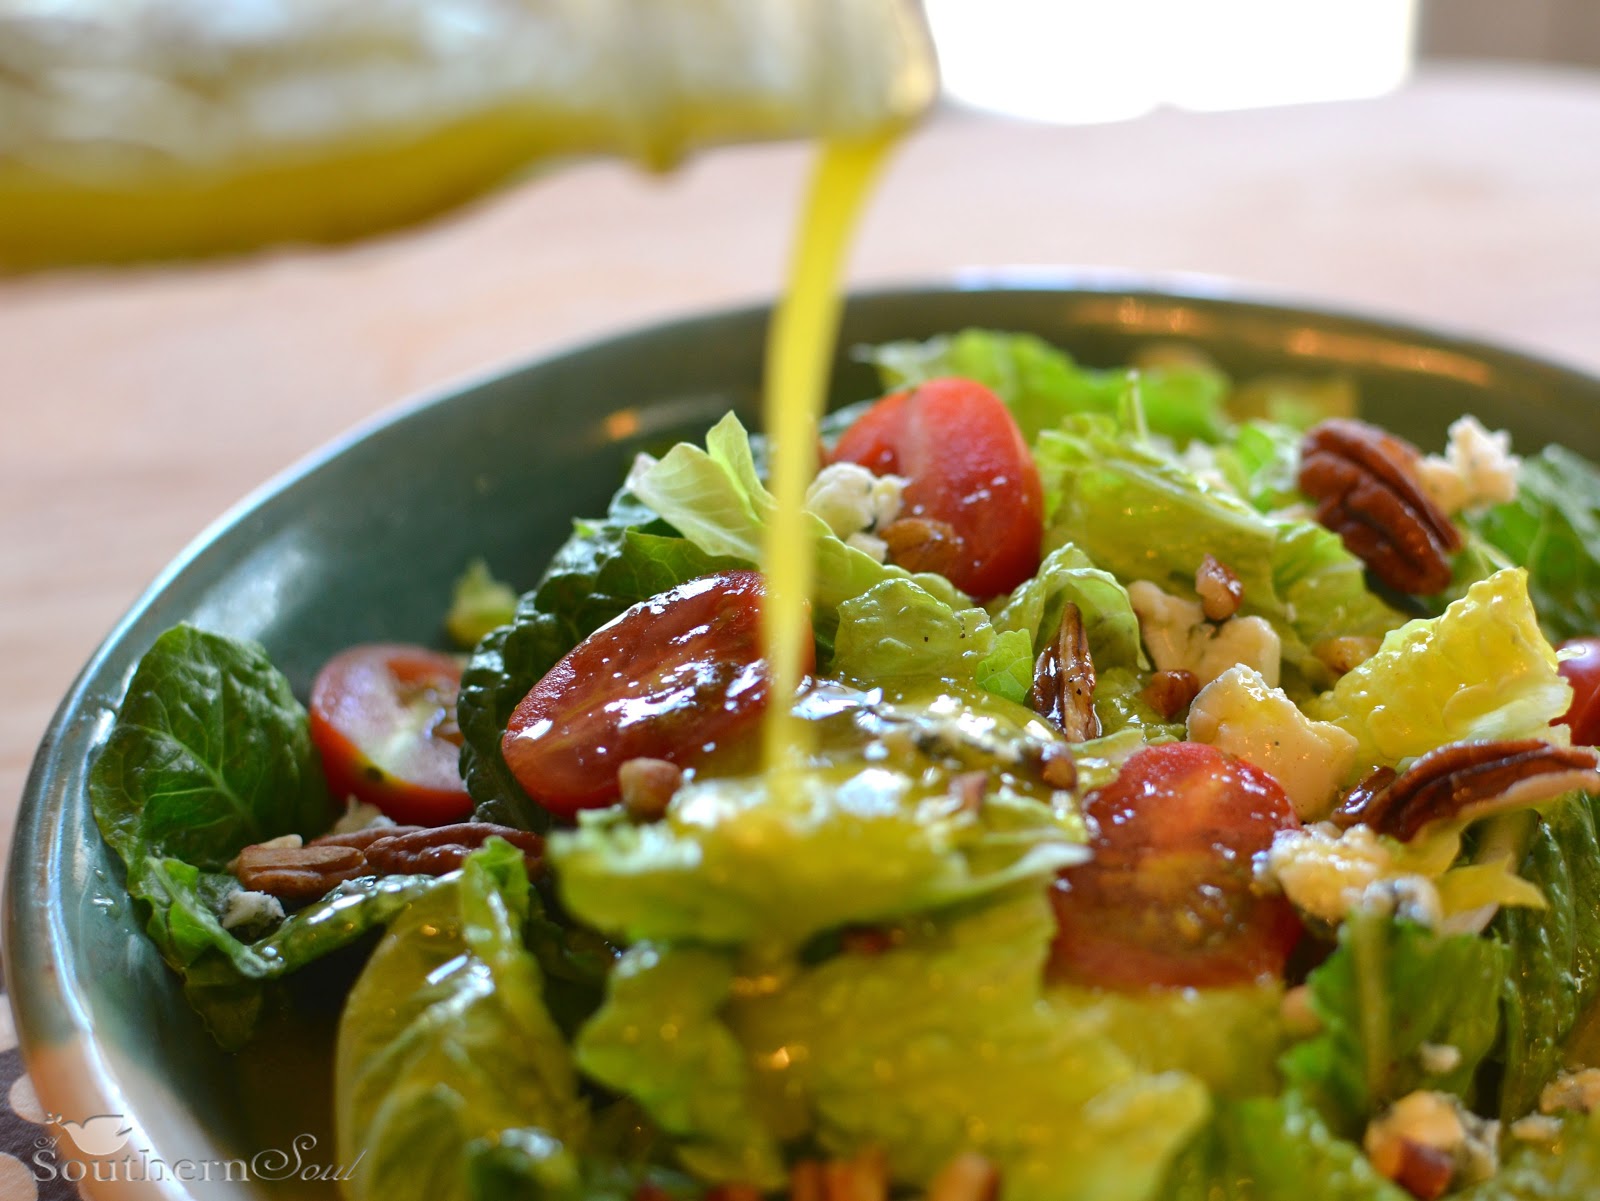 Basic Oil/Vinegar Salad Dressing - The Sacred Olive